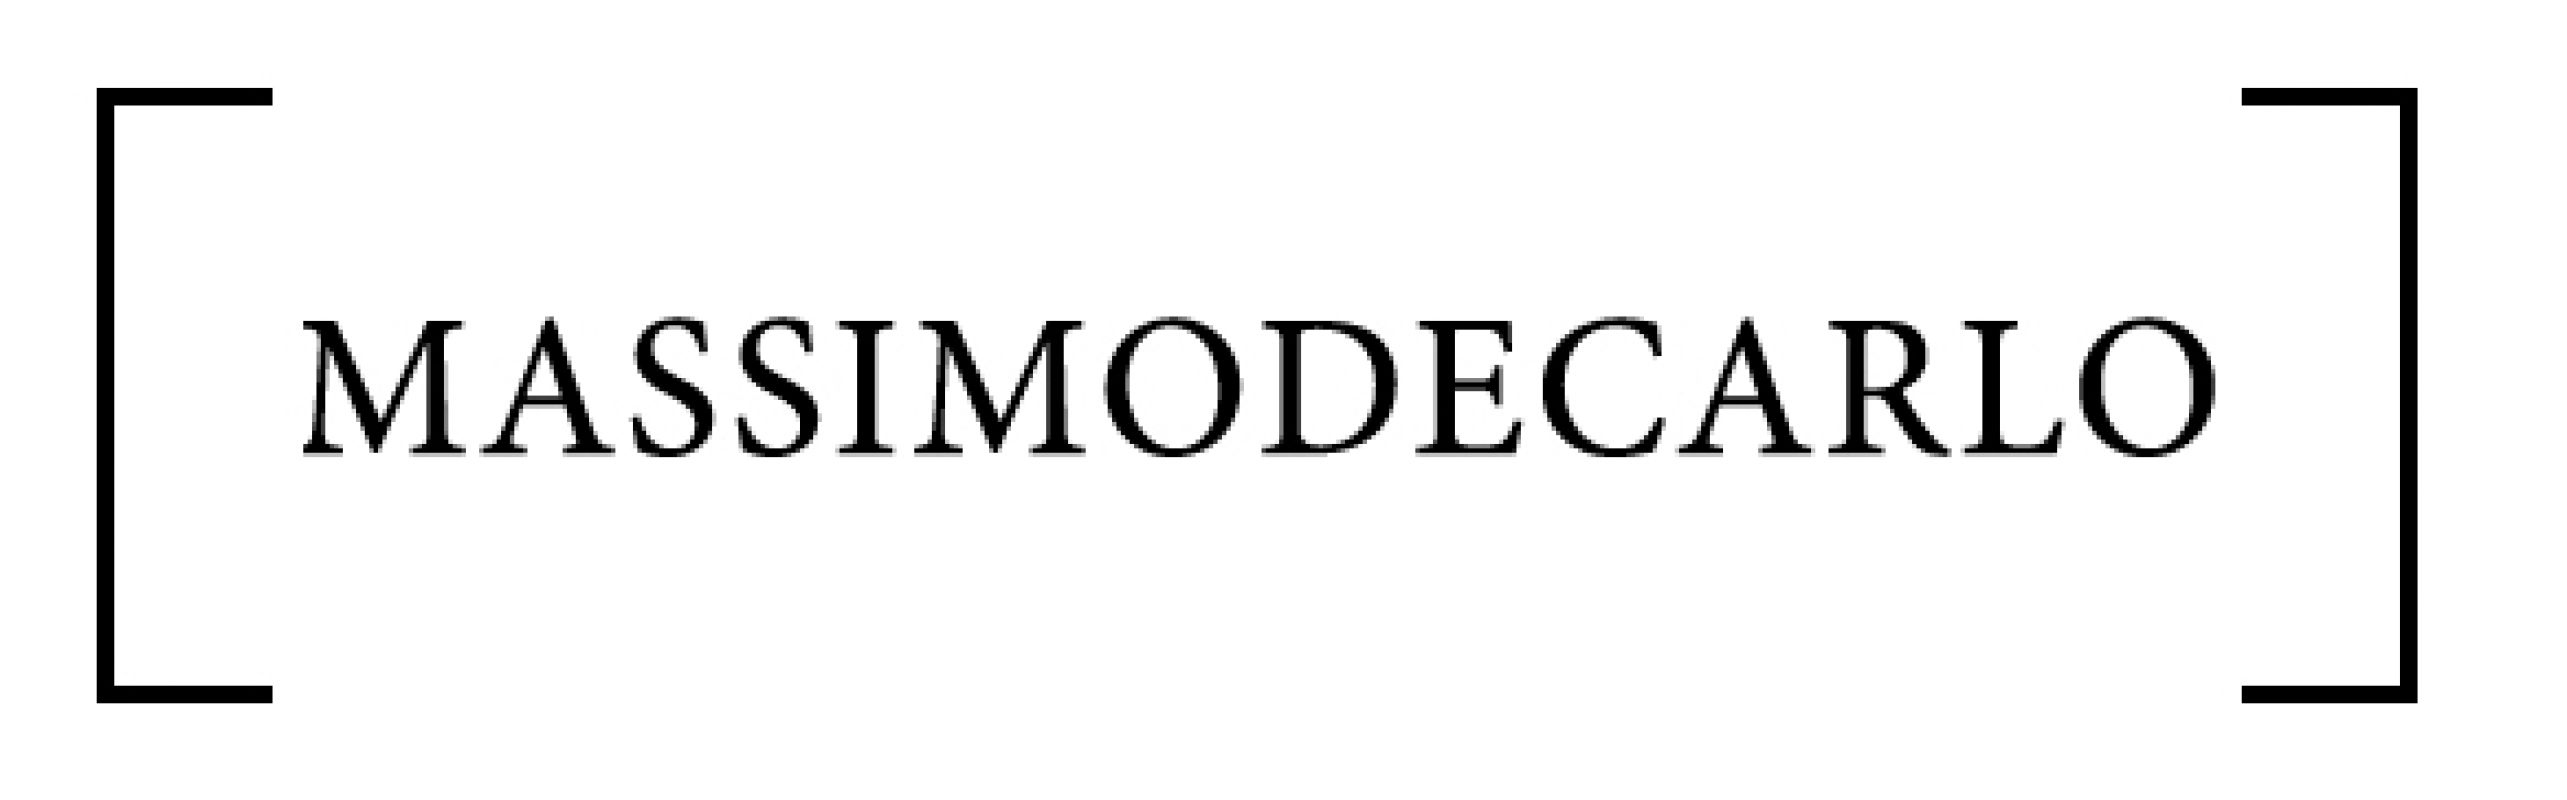 mdc_logo.jpg